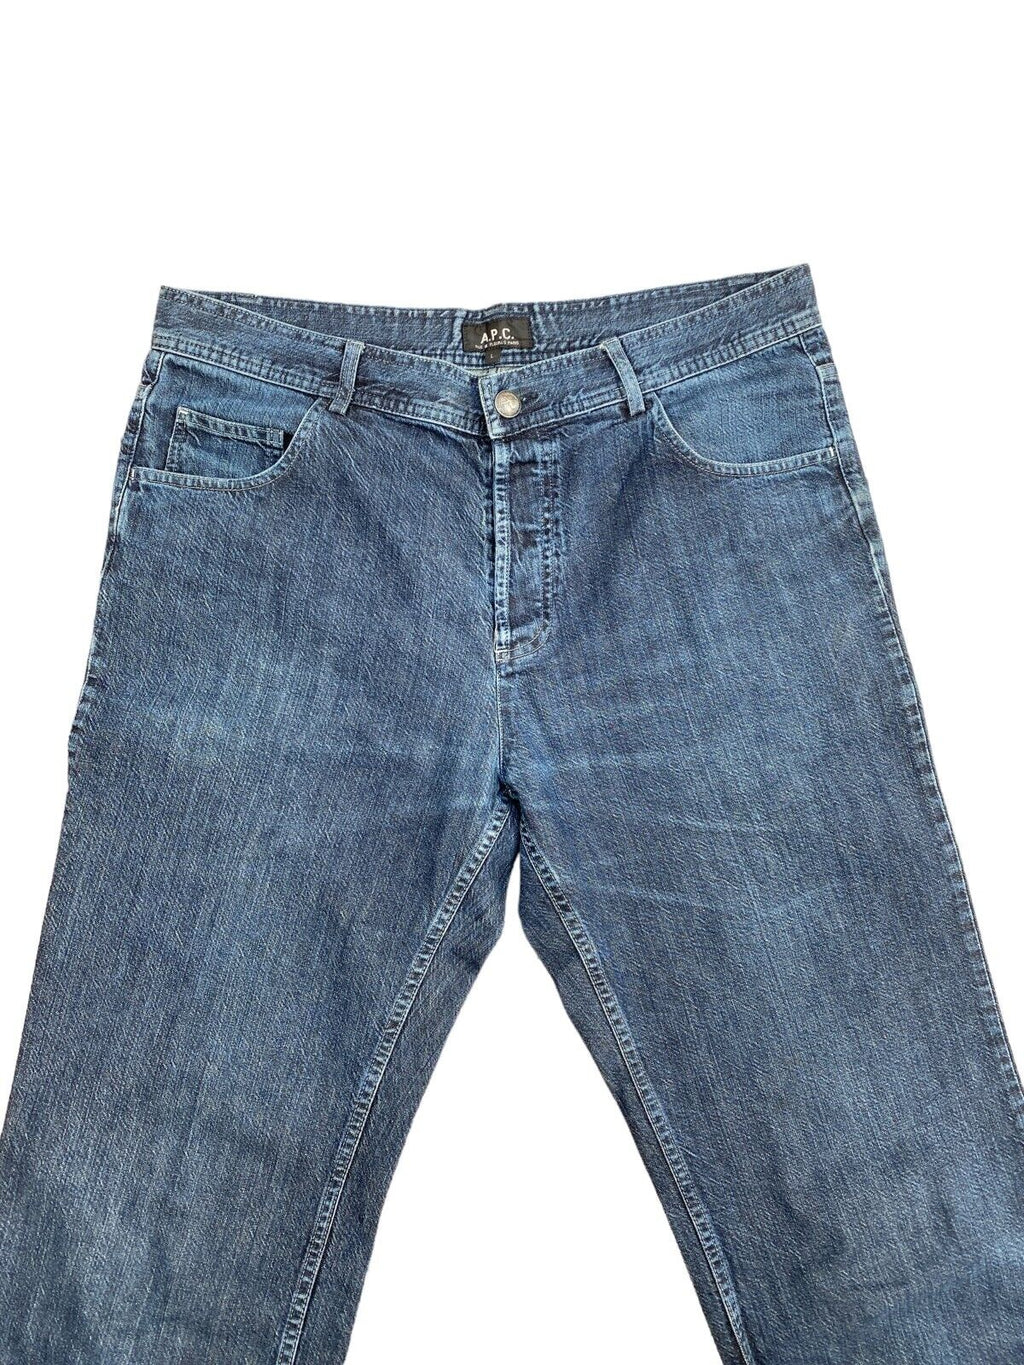 Raw Denim Jeans Lightweight denim jeans